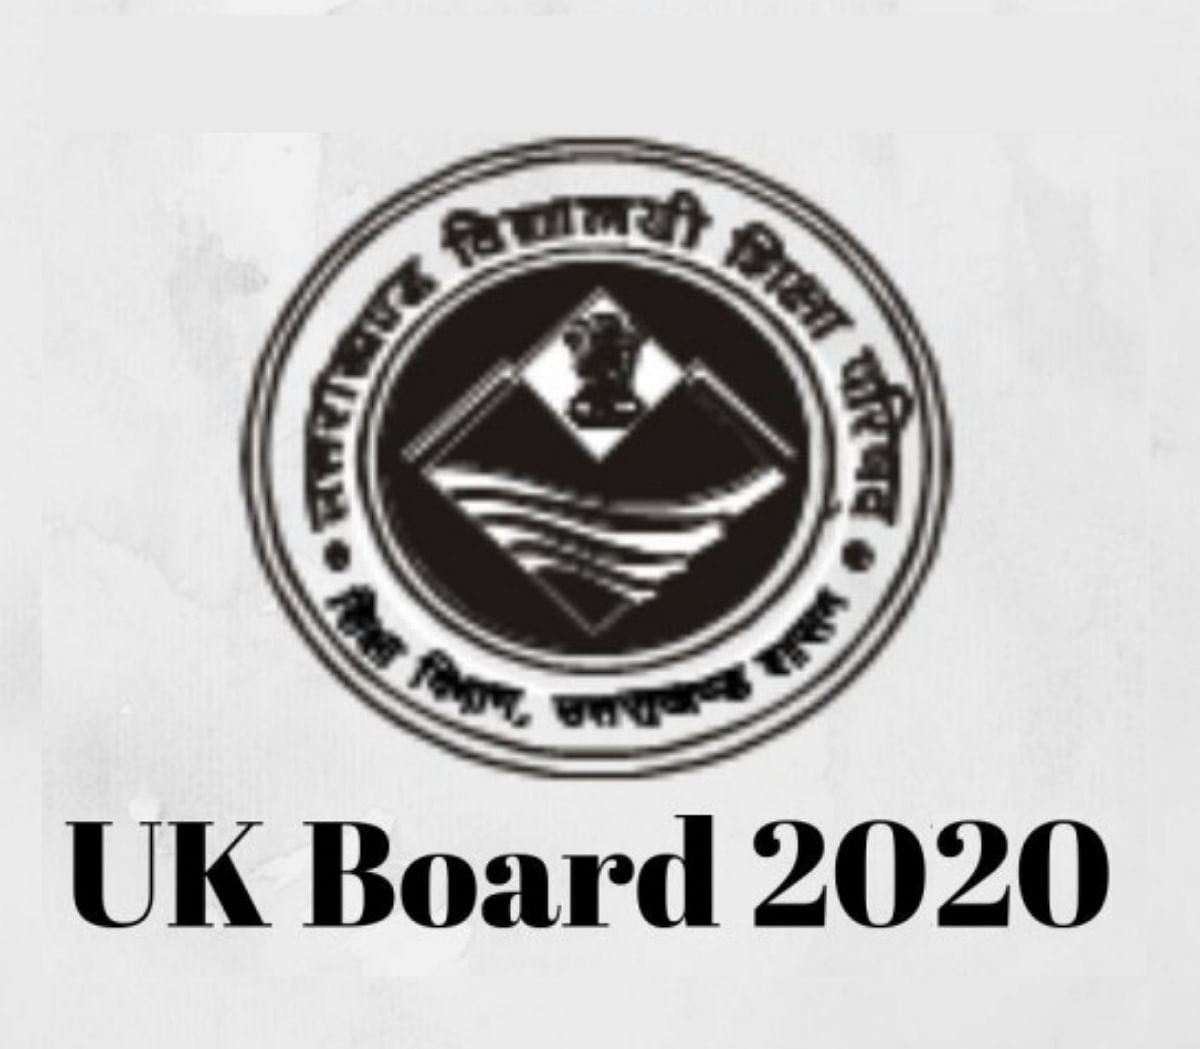 UK Board 2020: Check Latest Updates Here